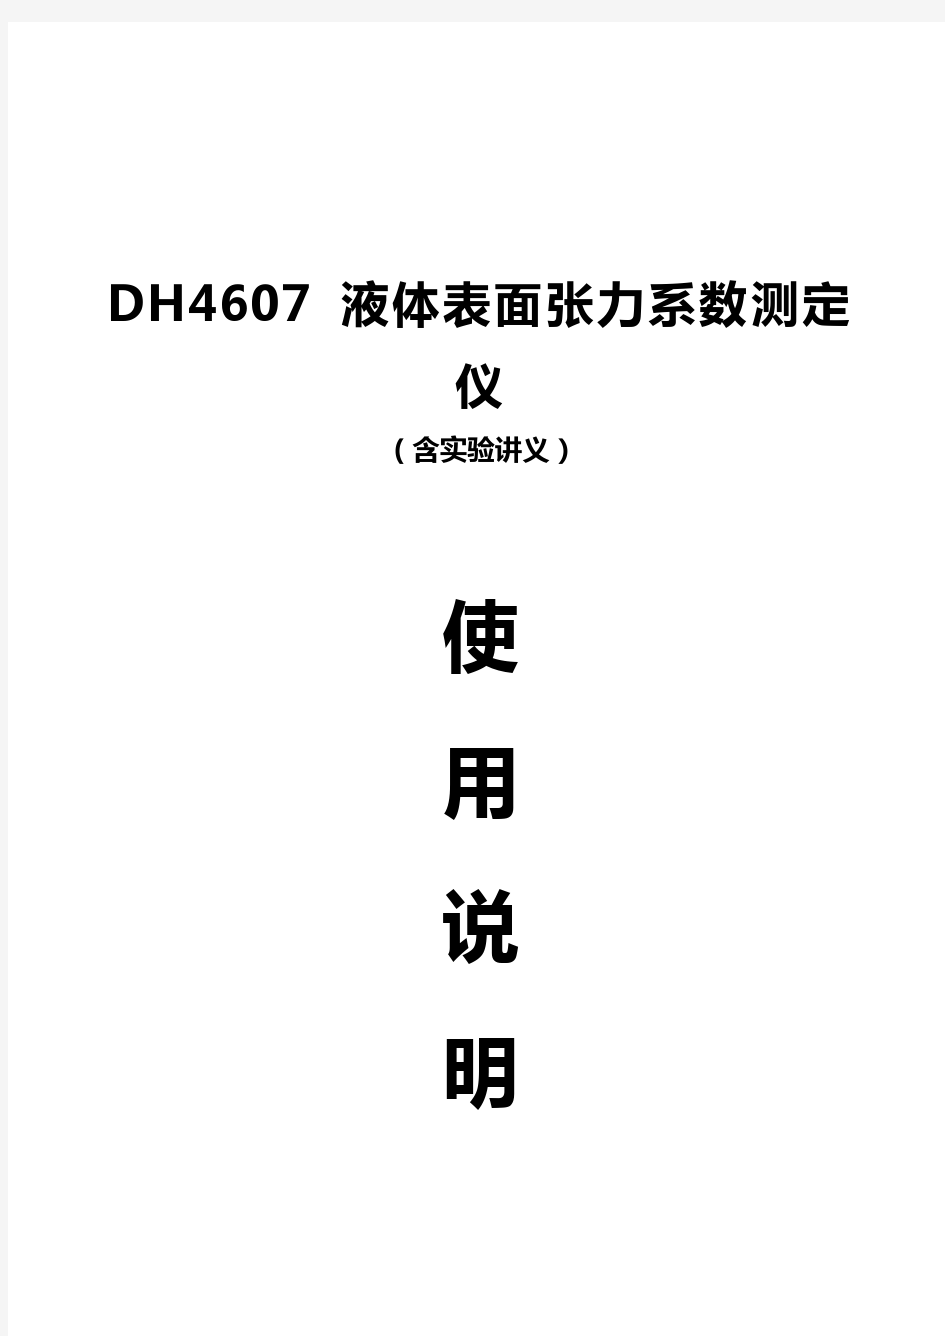 DH4607 液体表面张力测定仪使用说明书